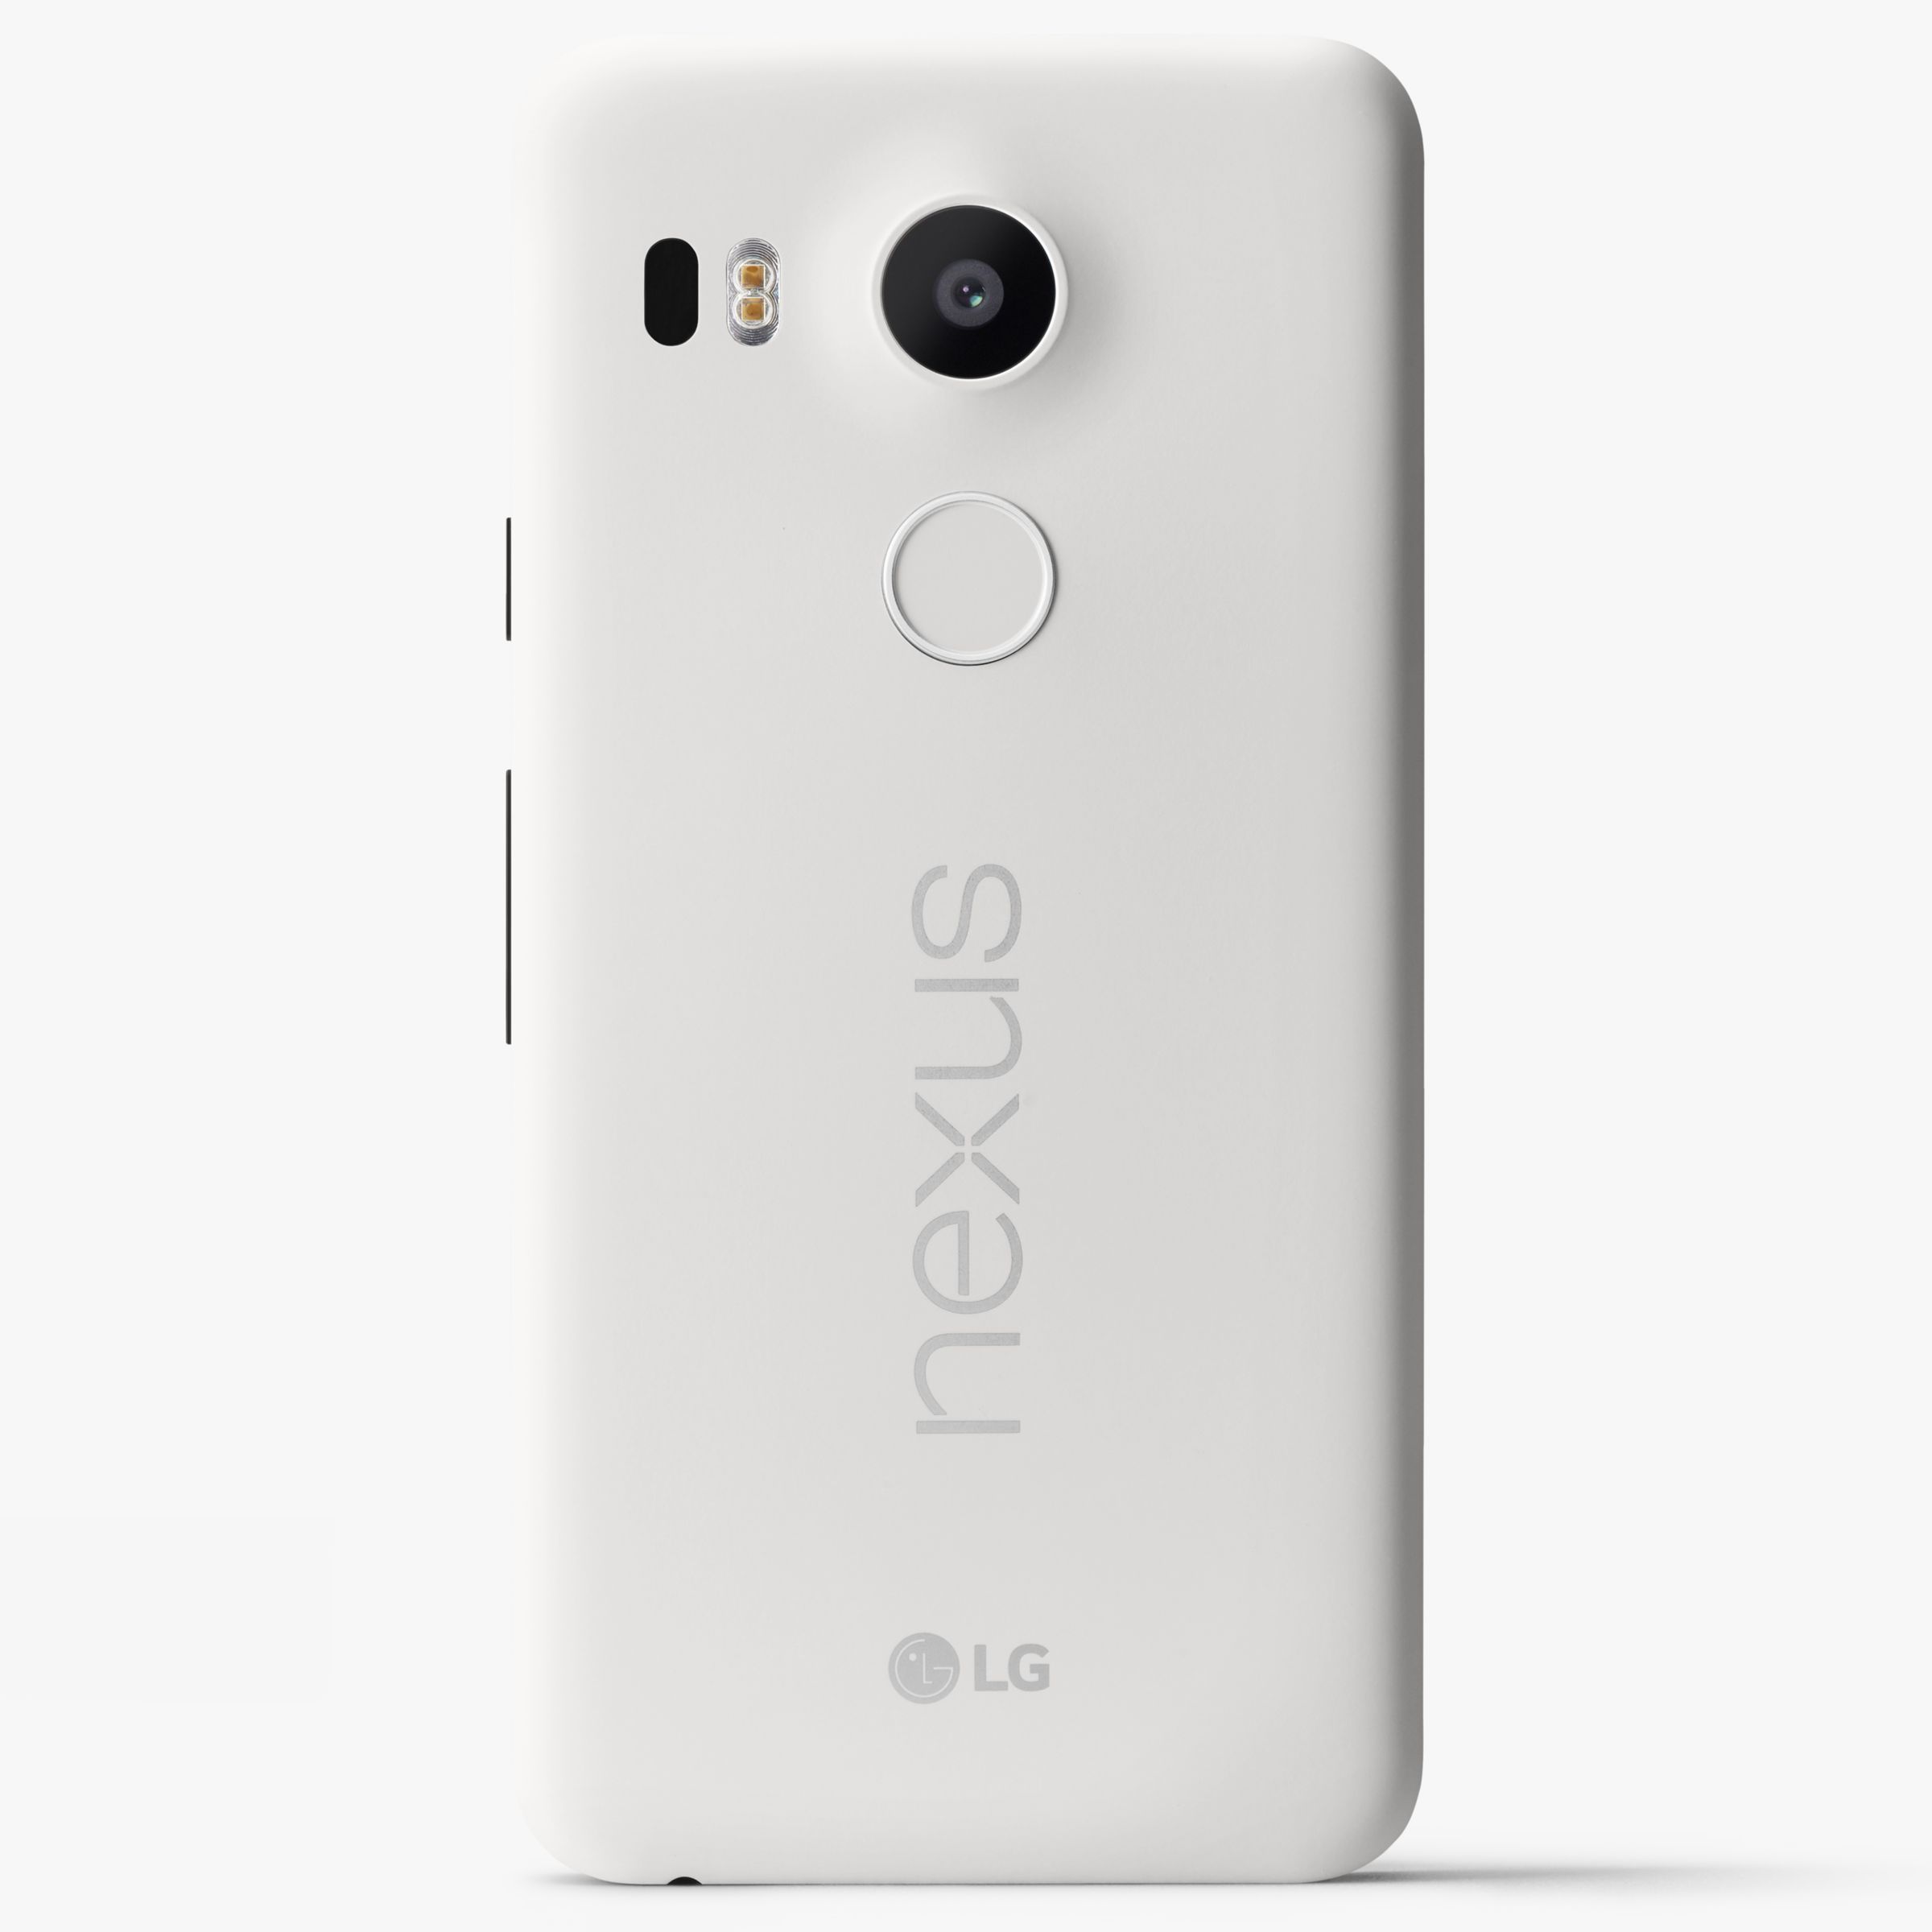 Lg Nexus 5x Smartphone Android 5 2 Sim Free 32gb At John